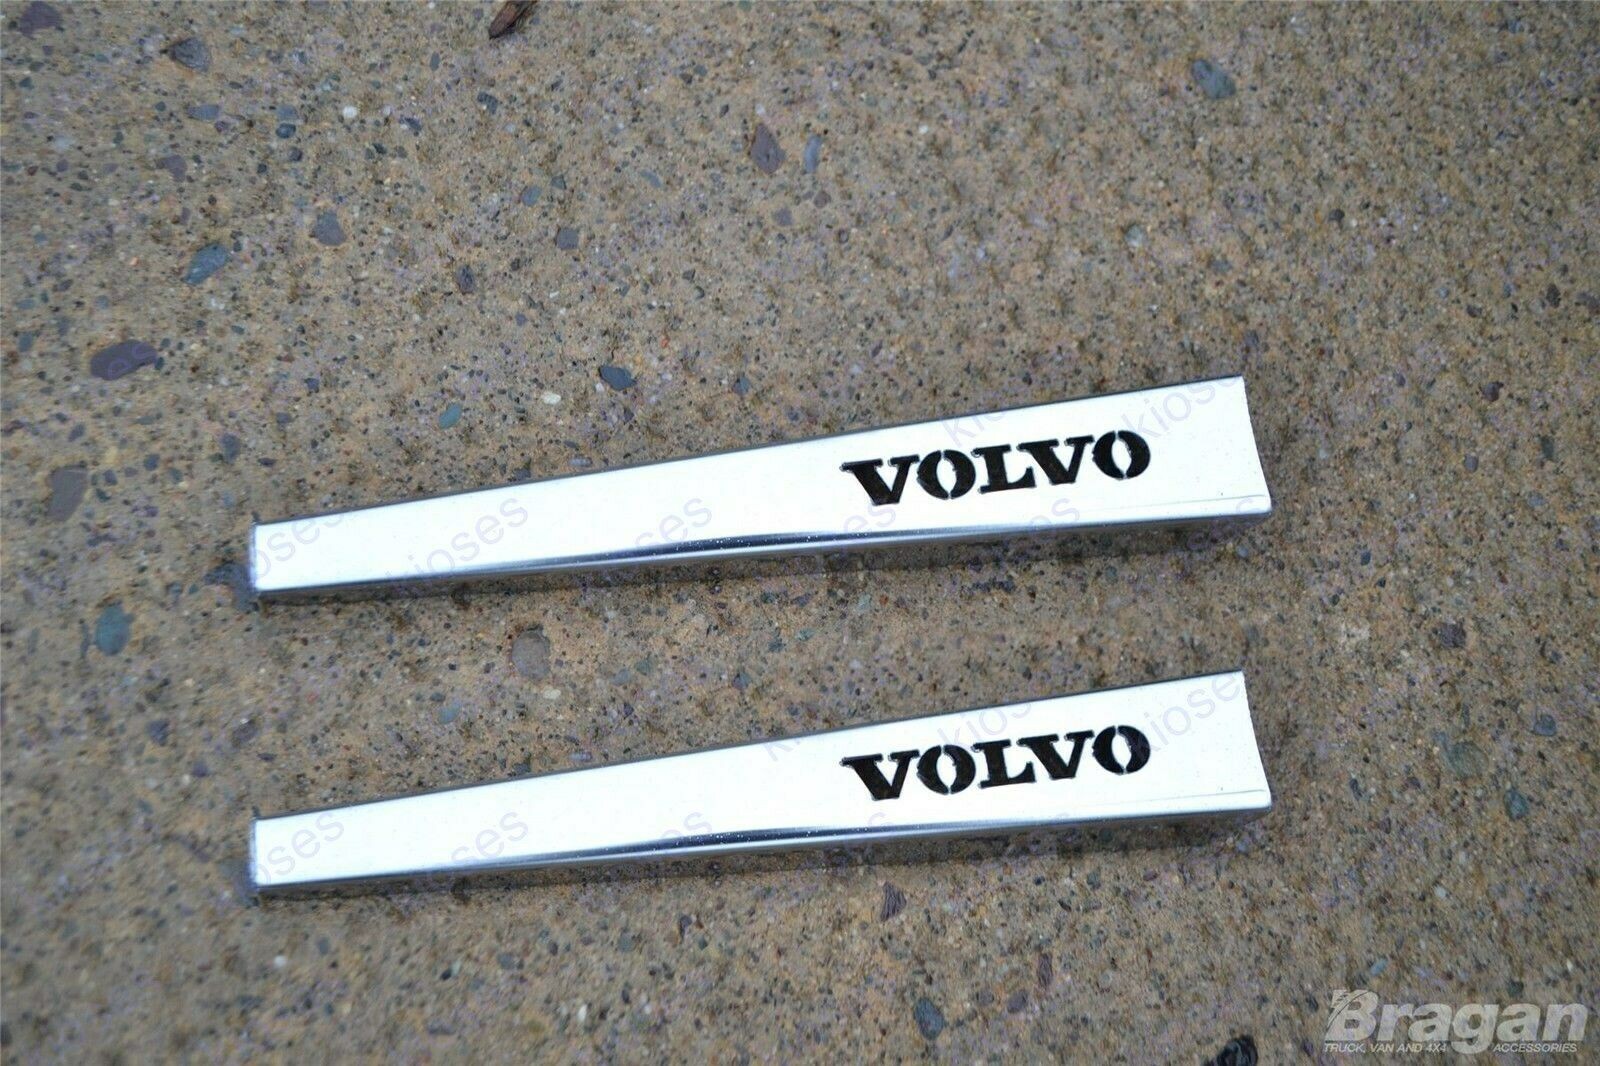 Volvo FH FM Series 2-3 Chrome Wiper Arm Blade Cover 2 pcs 2001-2012 LHD Drive